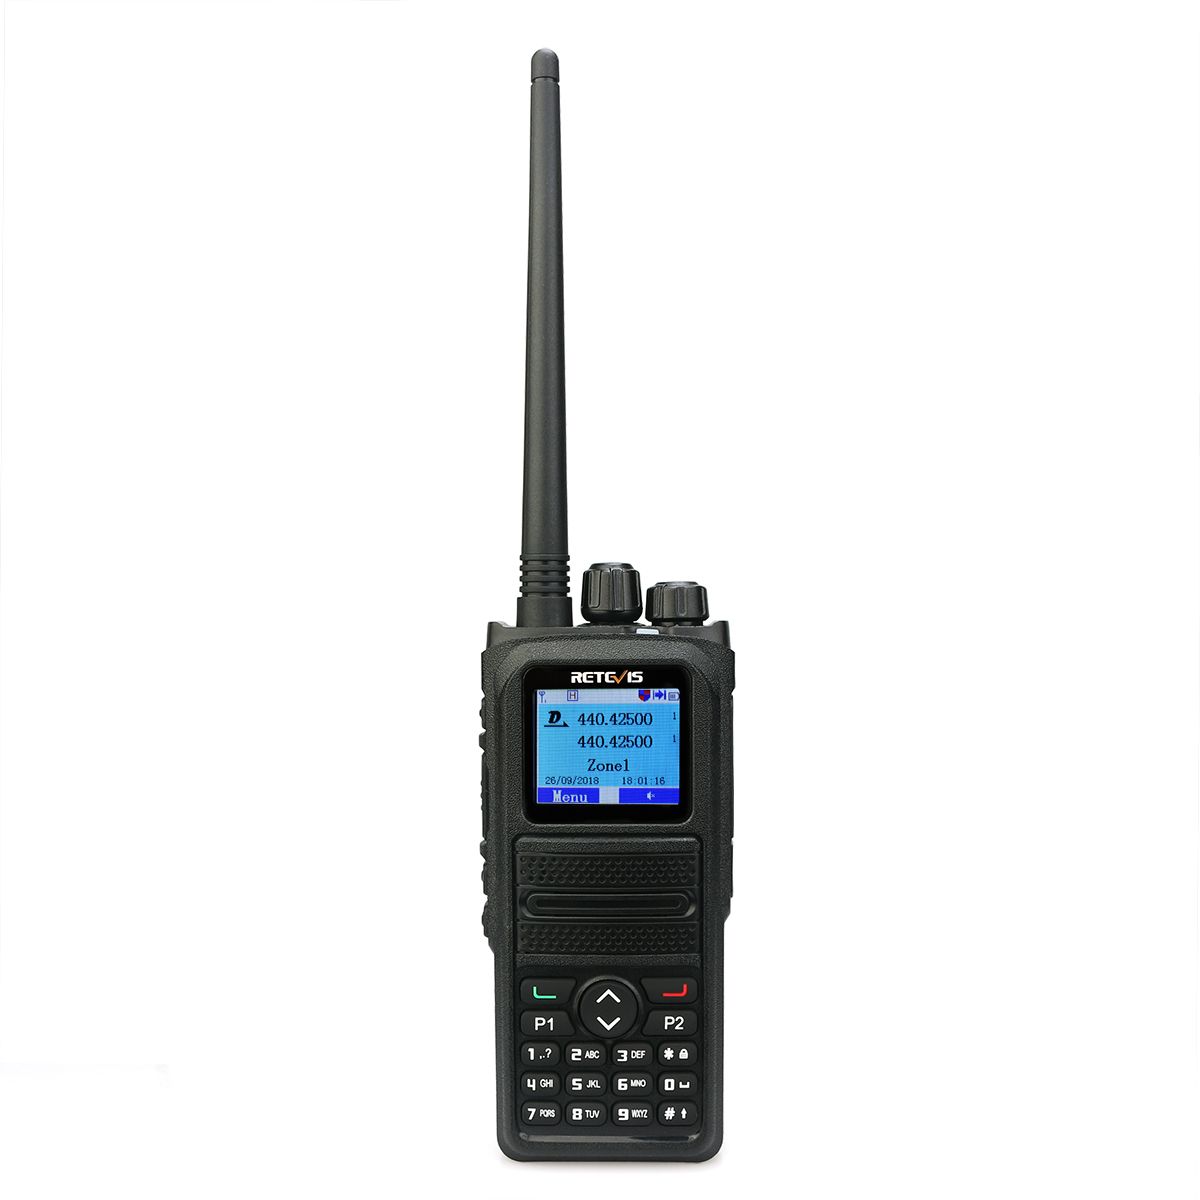 Retevis-RT84-DMR-Dual-Band-Walkie-Talkie-5W-VHF-UHF-DMR-DigitalAnalog-Two-way-Radio-Transceiver-1454227